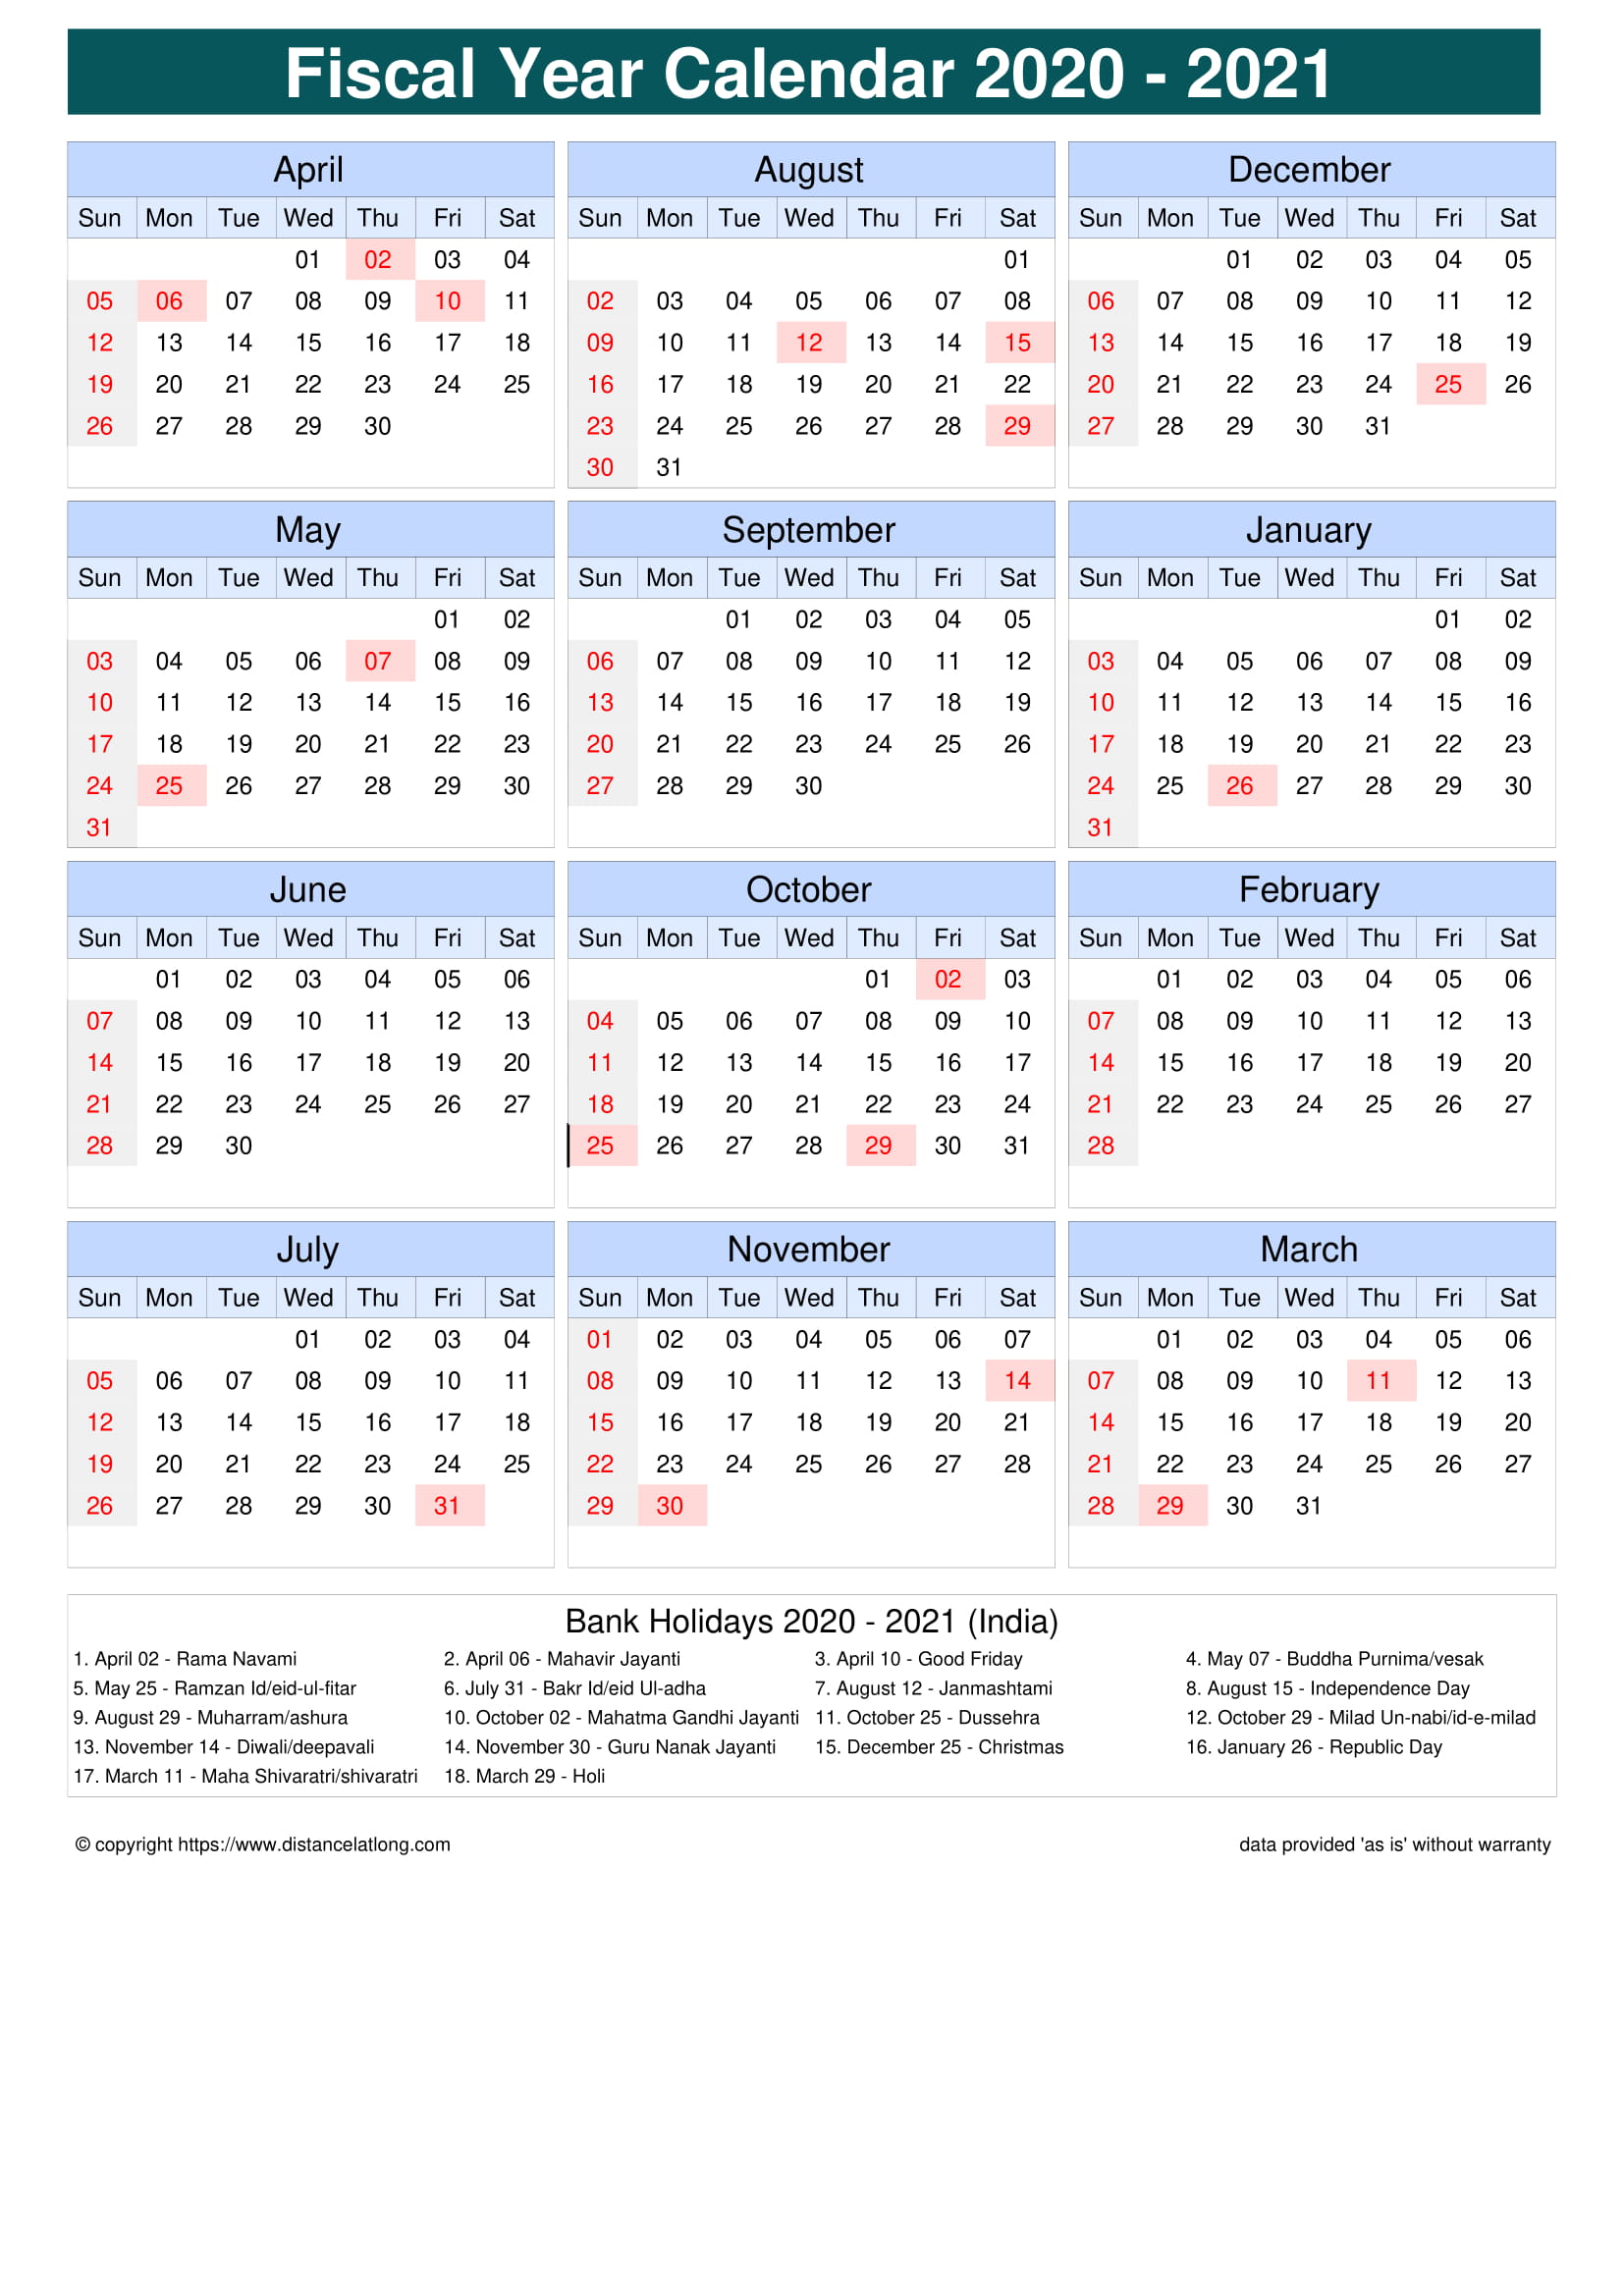 january india holiday 2021 calendar India Holiday Calendar 2021 Jpg Templates Distancelatlong Com january india holiday 2021 calendar